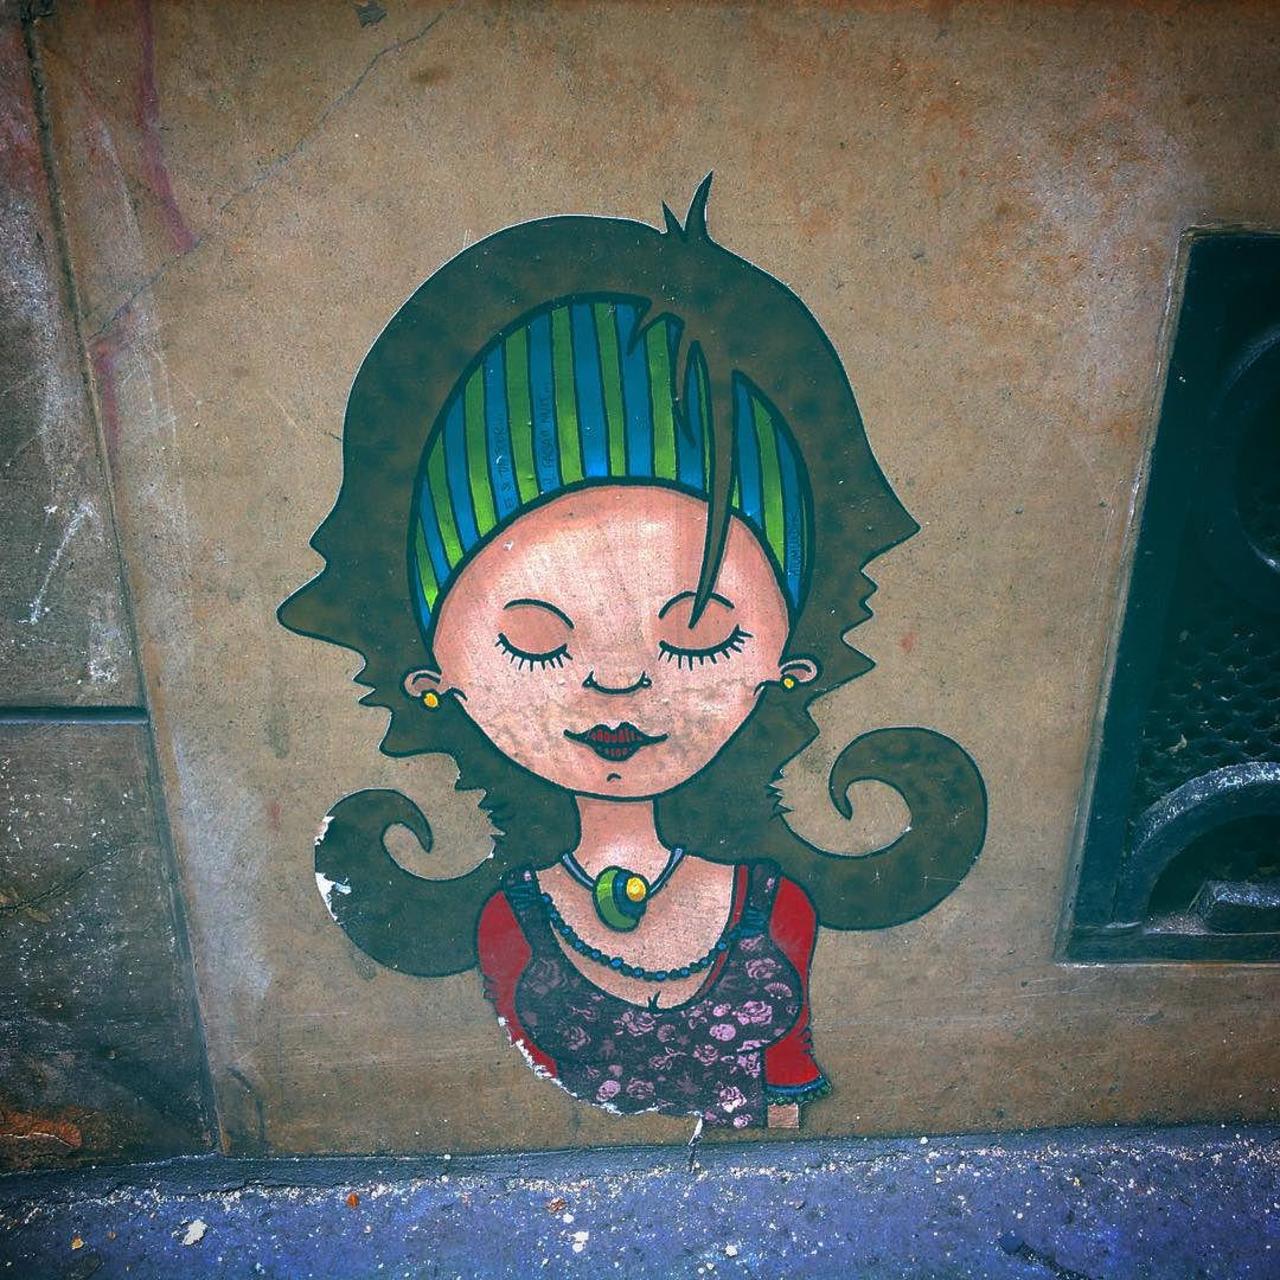 #Paris #graffiti photo by stefetlinda http://ift.tt/1OzPuL7 #StreetArt http://t.co/r0PKbPlry3 https://goo.gl/t4fpx2